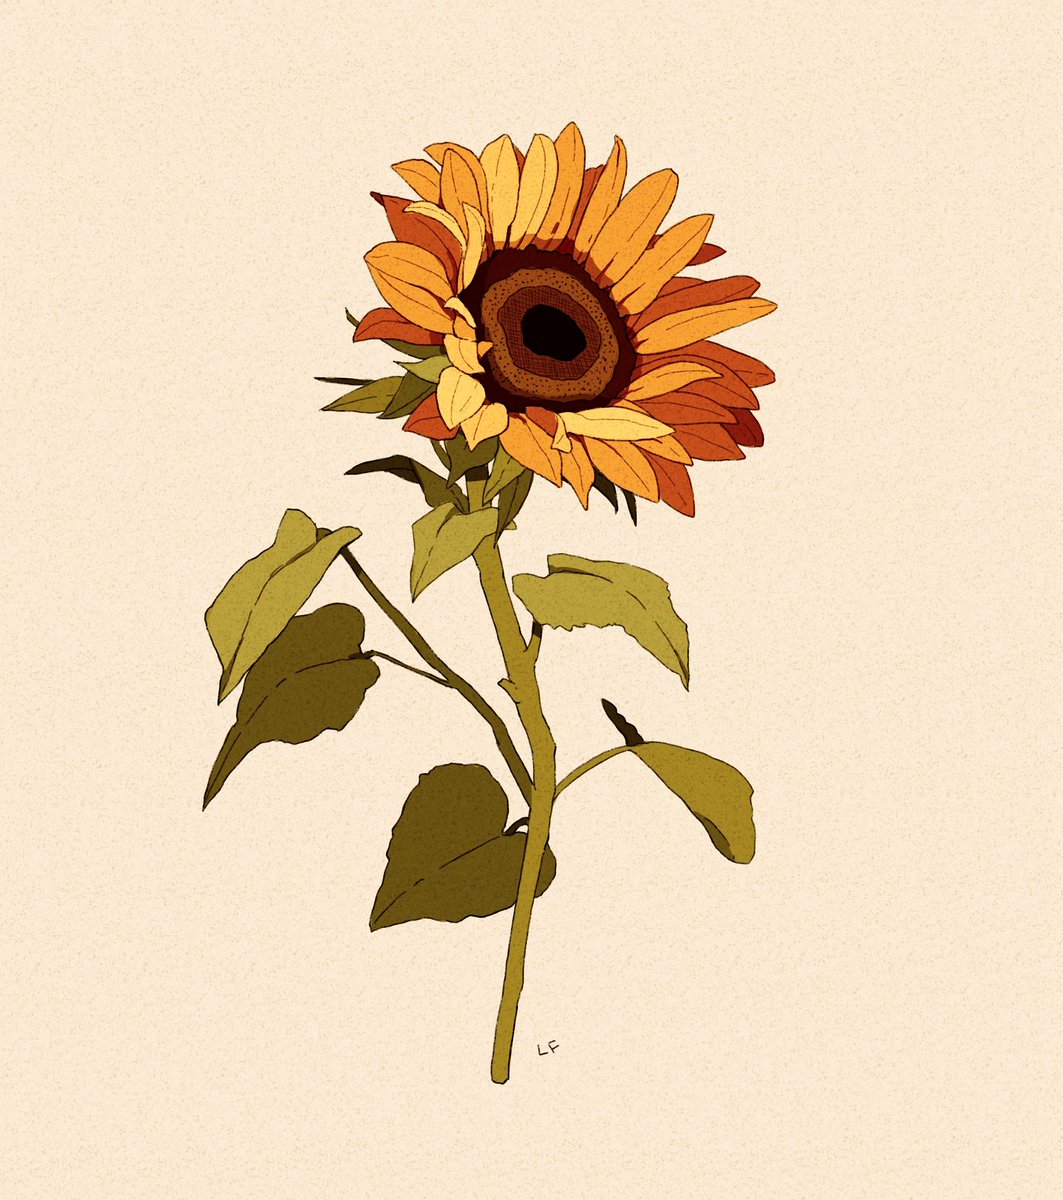 「Simple sunflower tatt commish 」|Libbyのイラスト